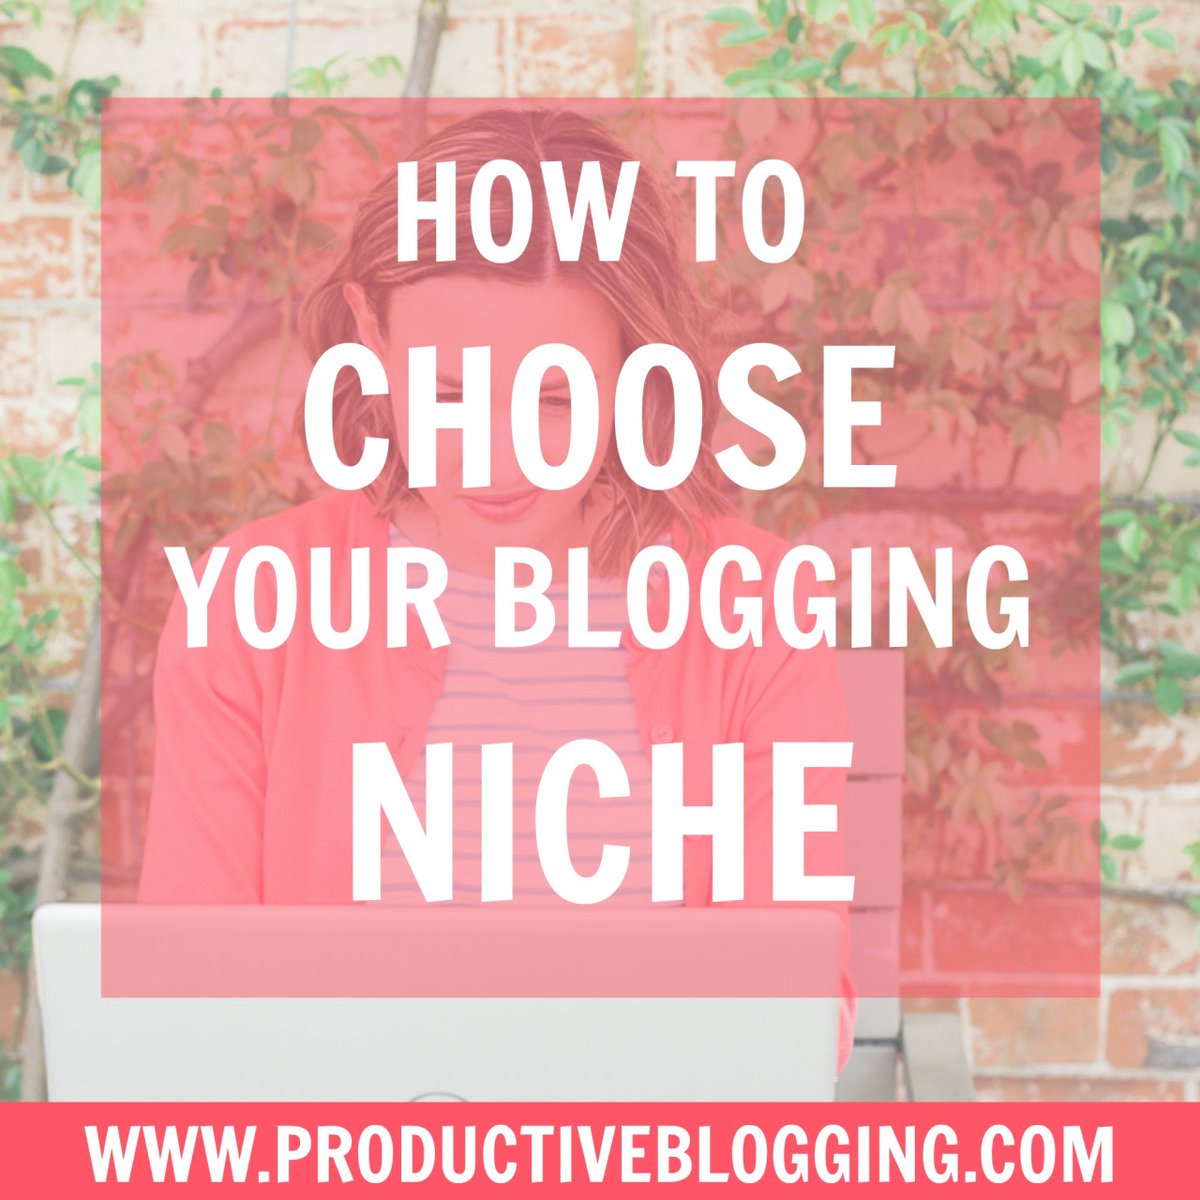 HOW TO CHOOSE THE RIGHT NICHE FOR YOUR BLOG => bit.ly/2JFYG5b

#niche #bloggingniche #blogniche #startablog #newblog #newblogger #bloggingnewbie #bloggingtips #productiveblogging